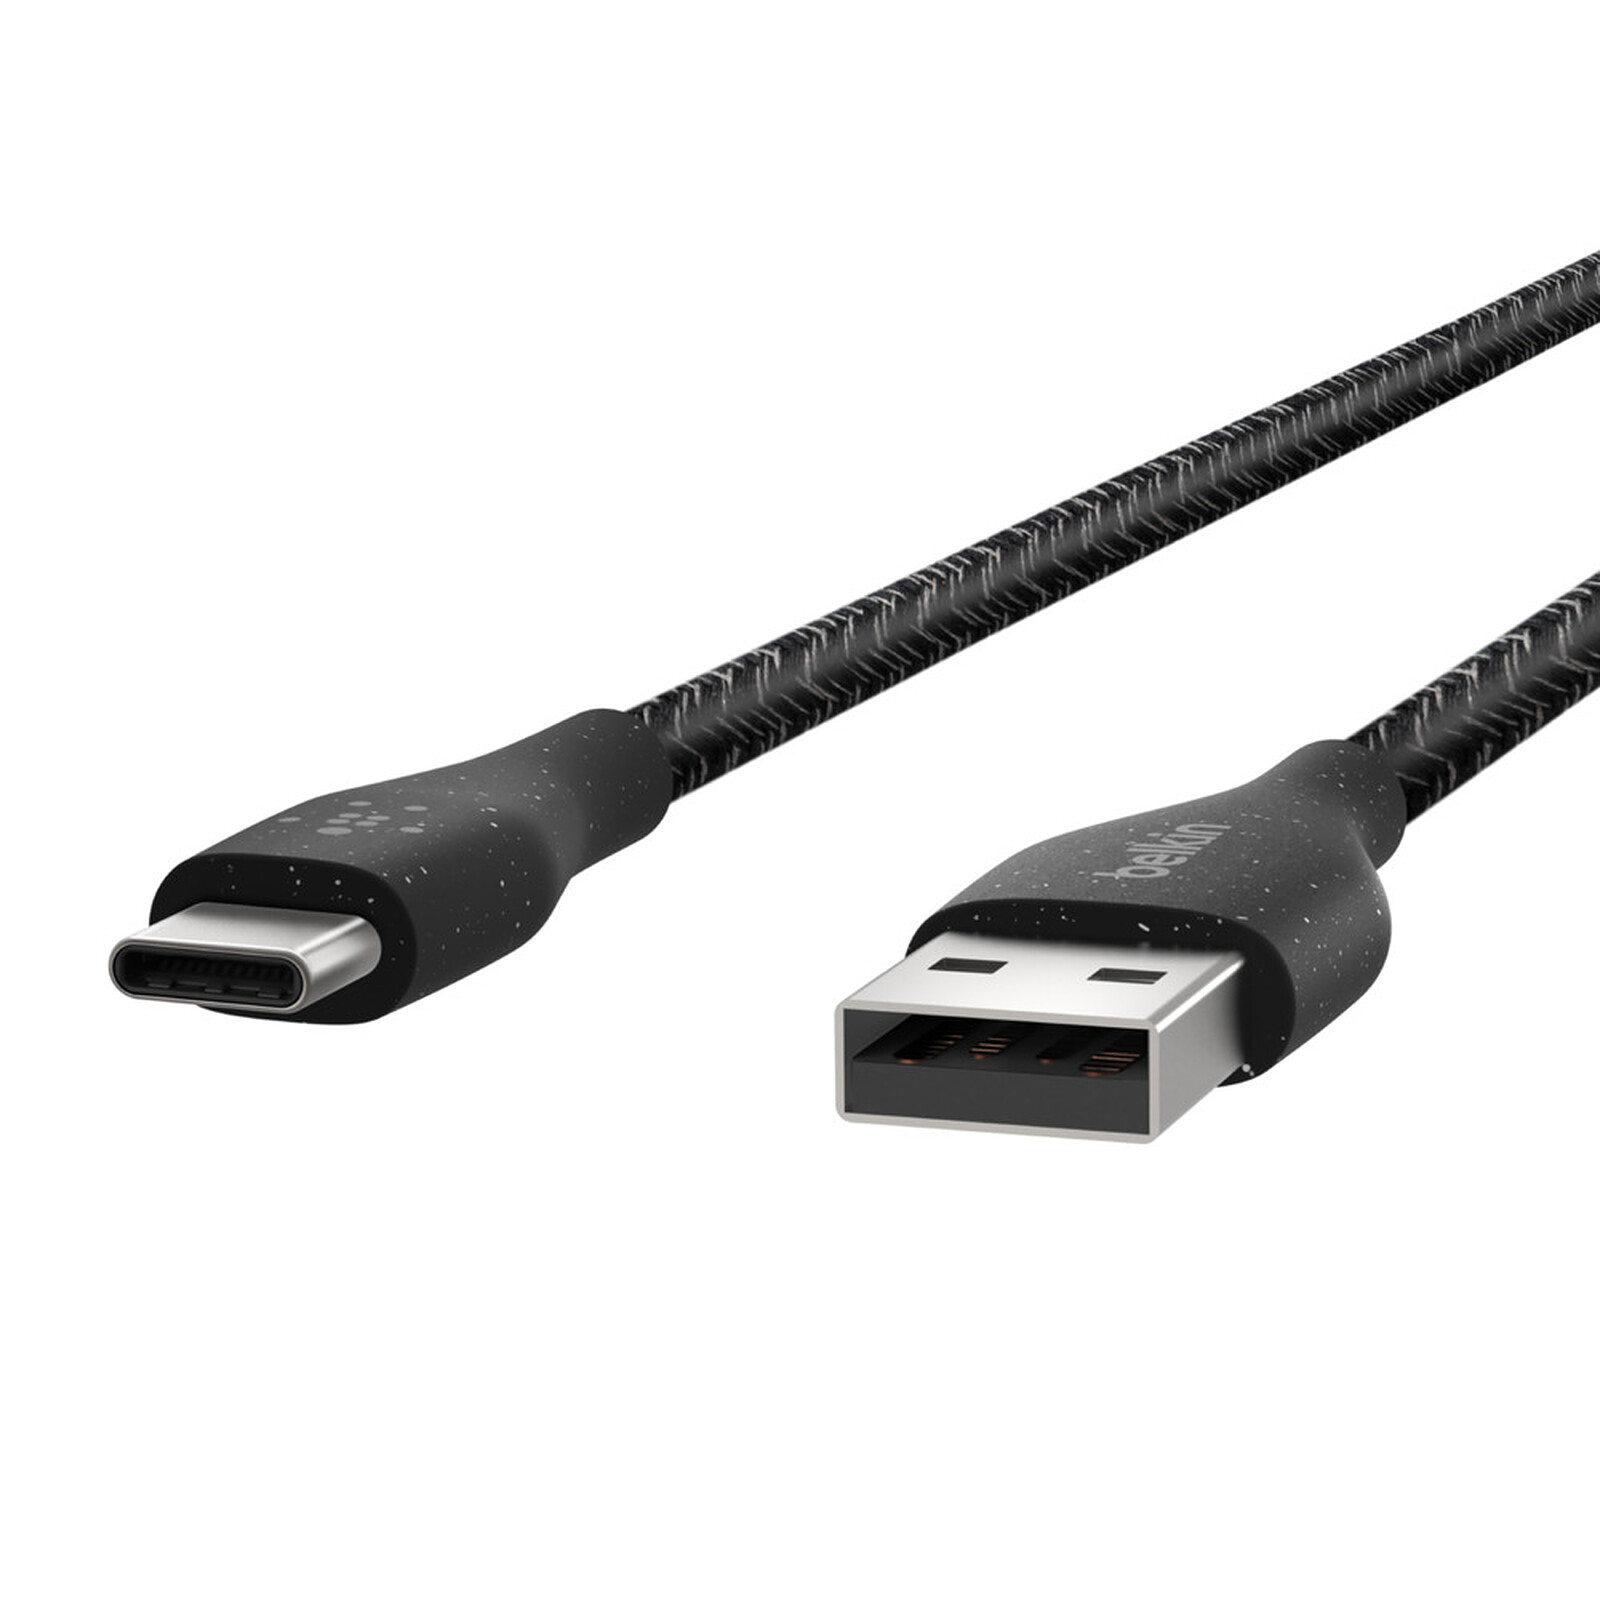 Belkin DuraTekPlus USB C to USB A with closure strap (Black